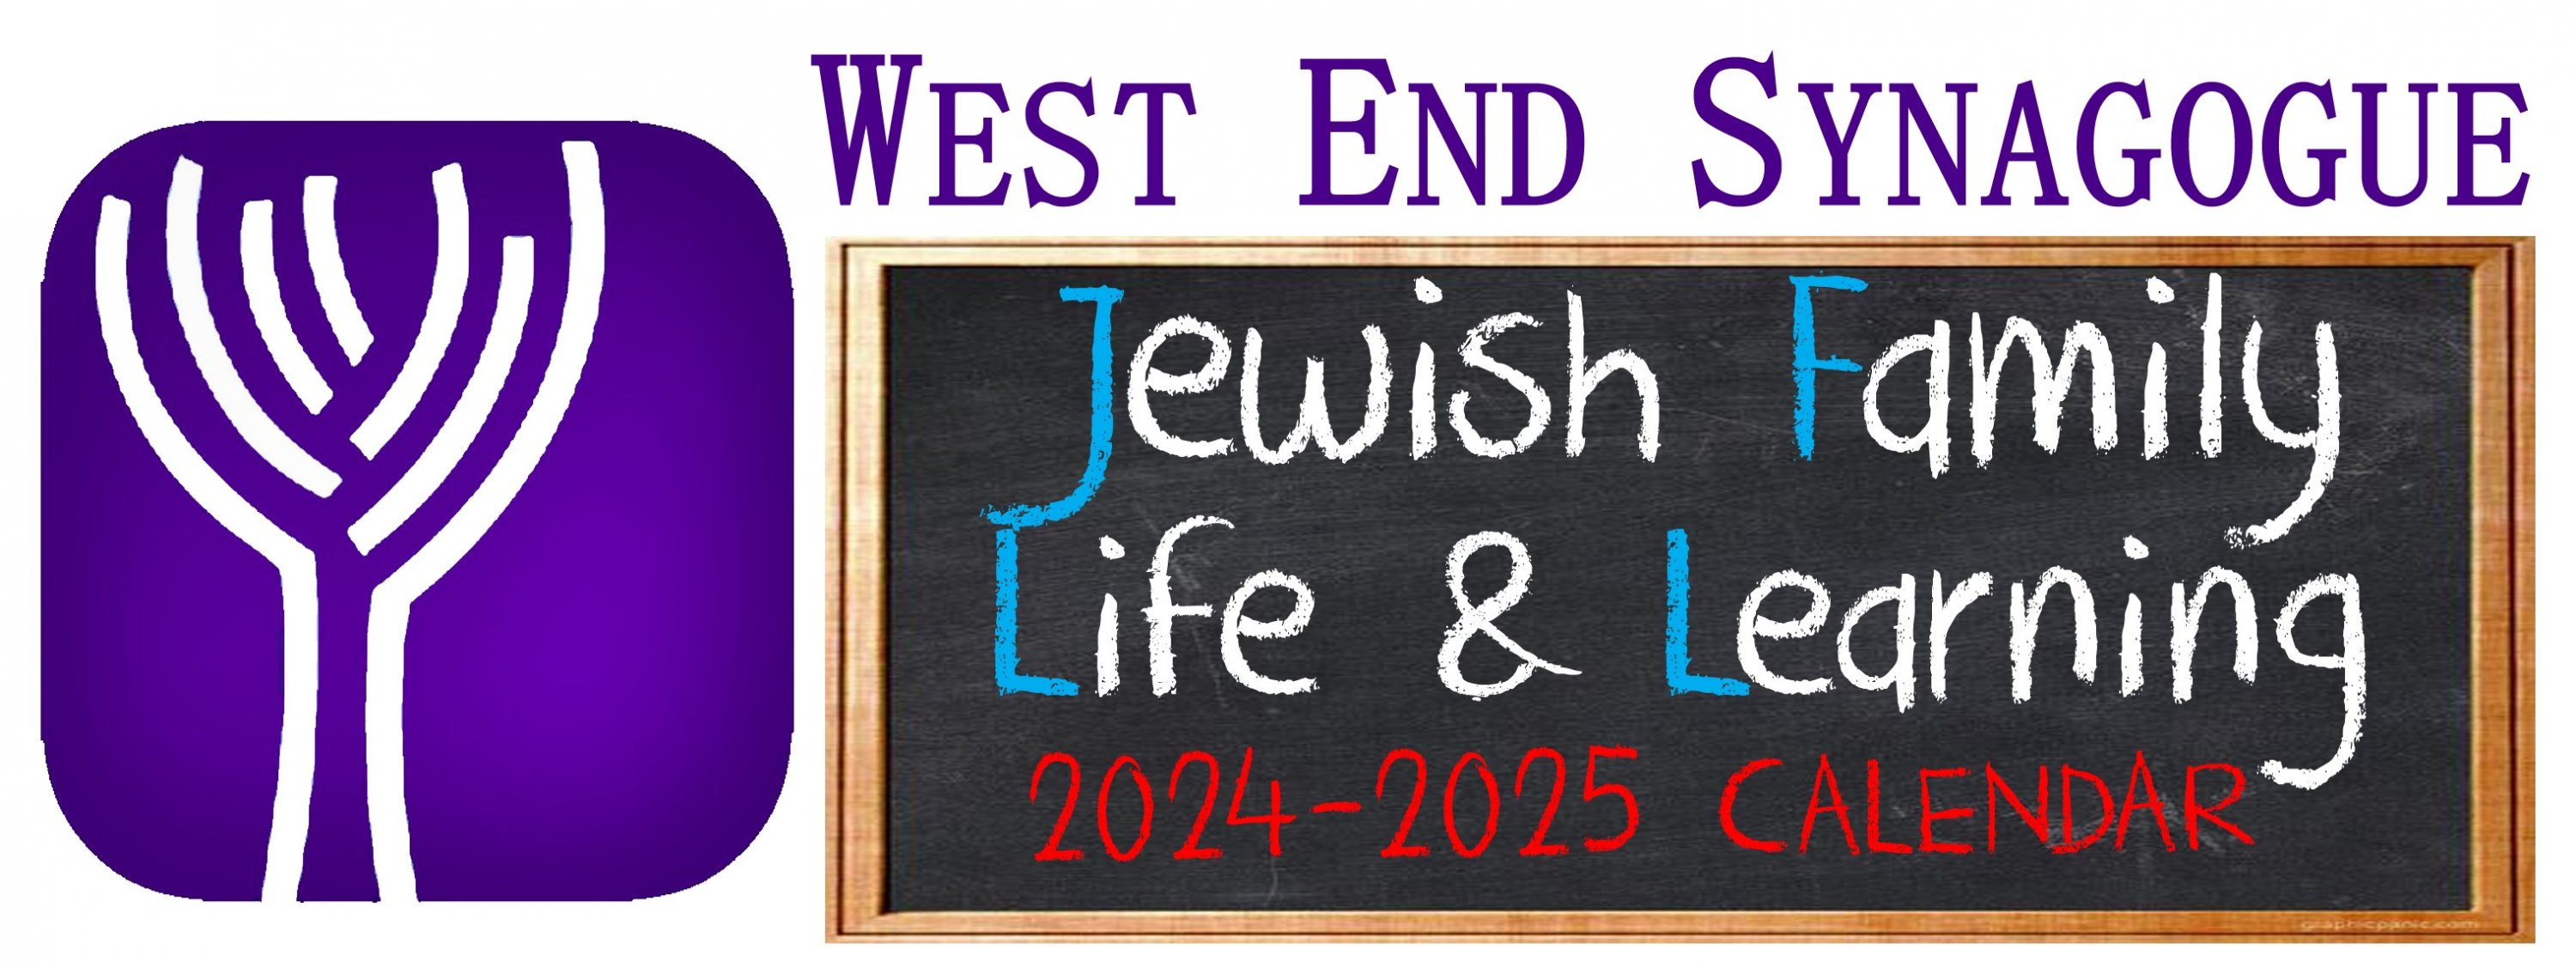 Jewish Family Life & Learning tots, kids, teens programs calendar 2024-2025 